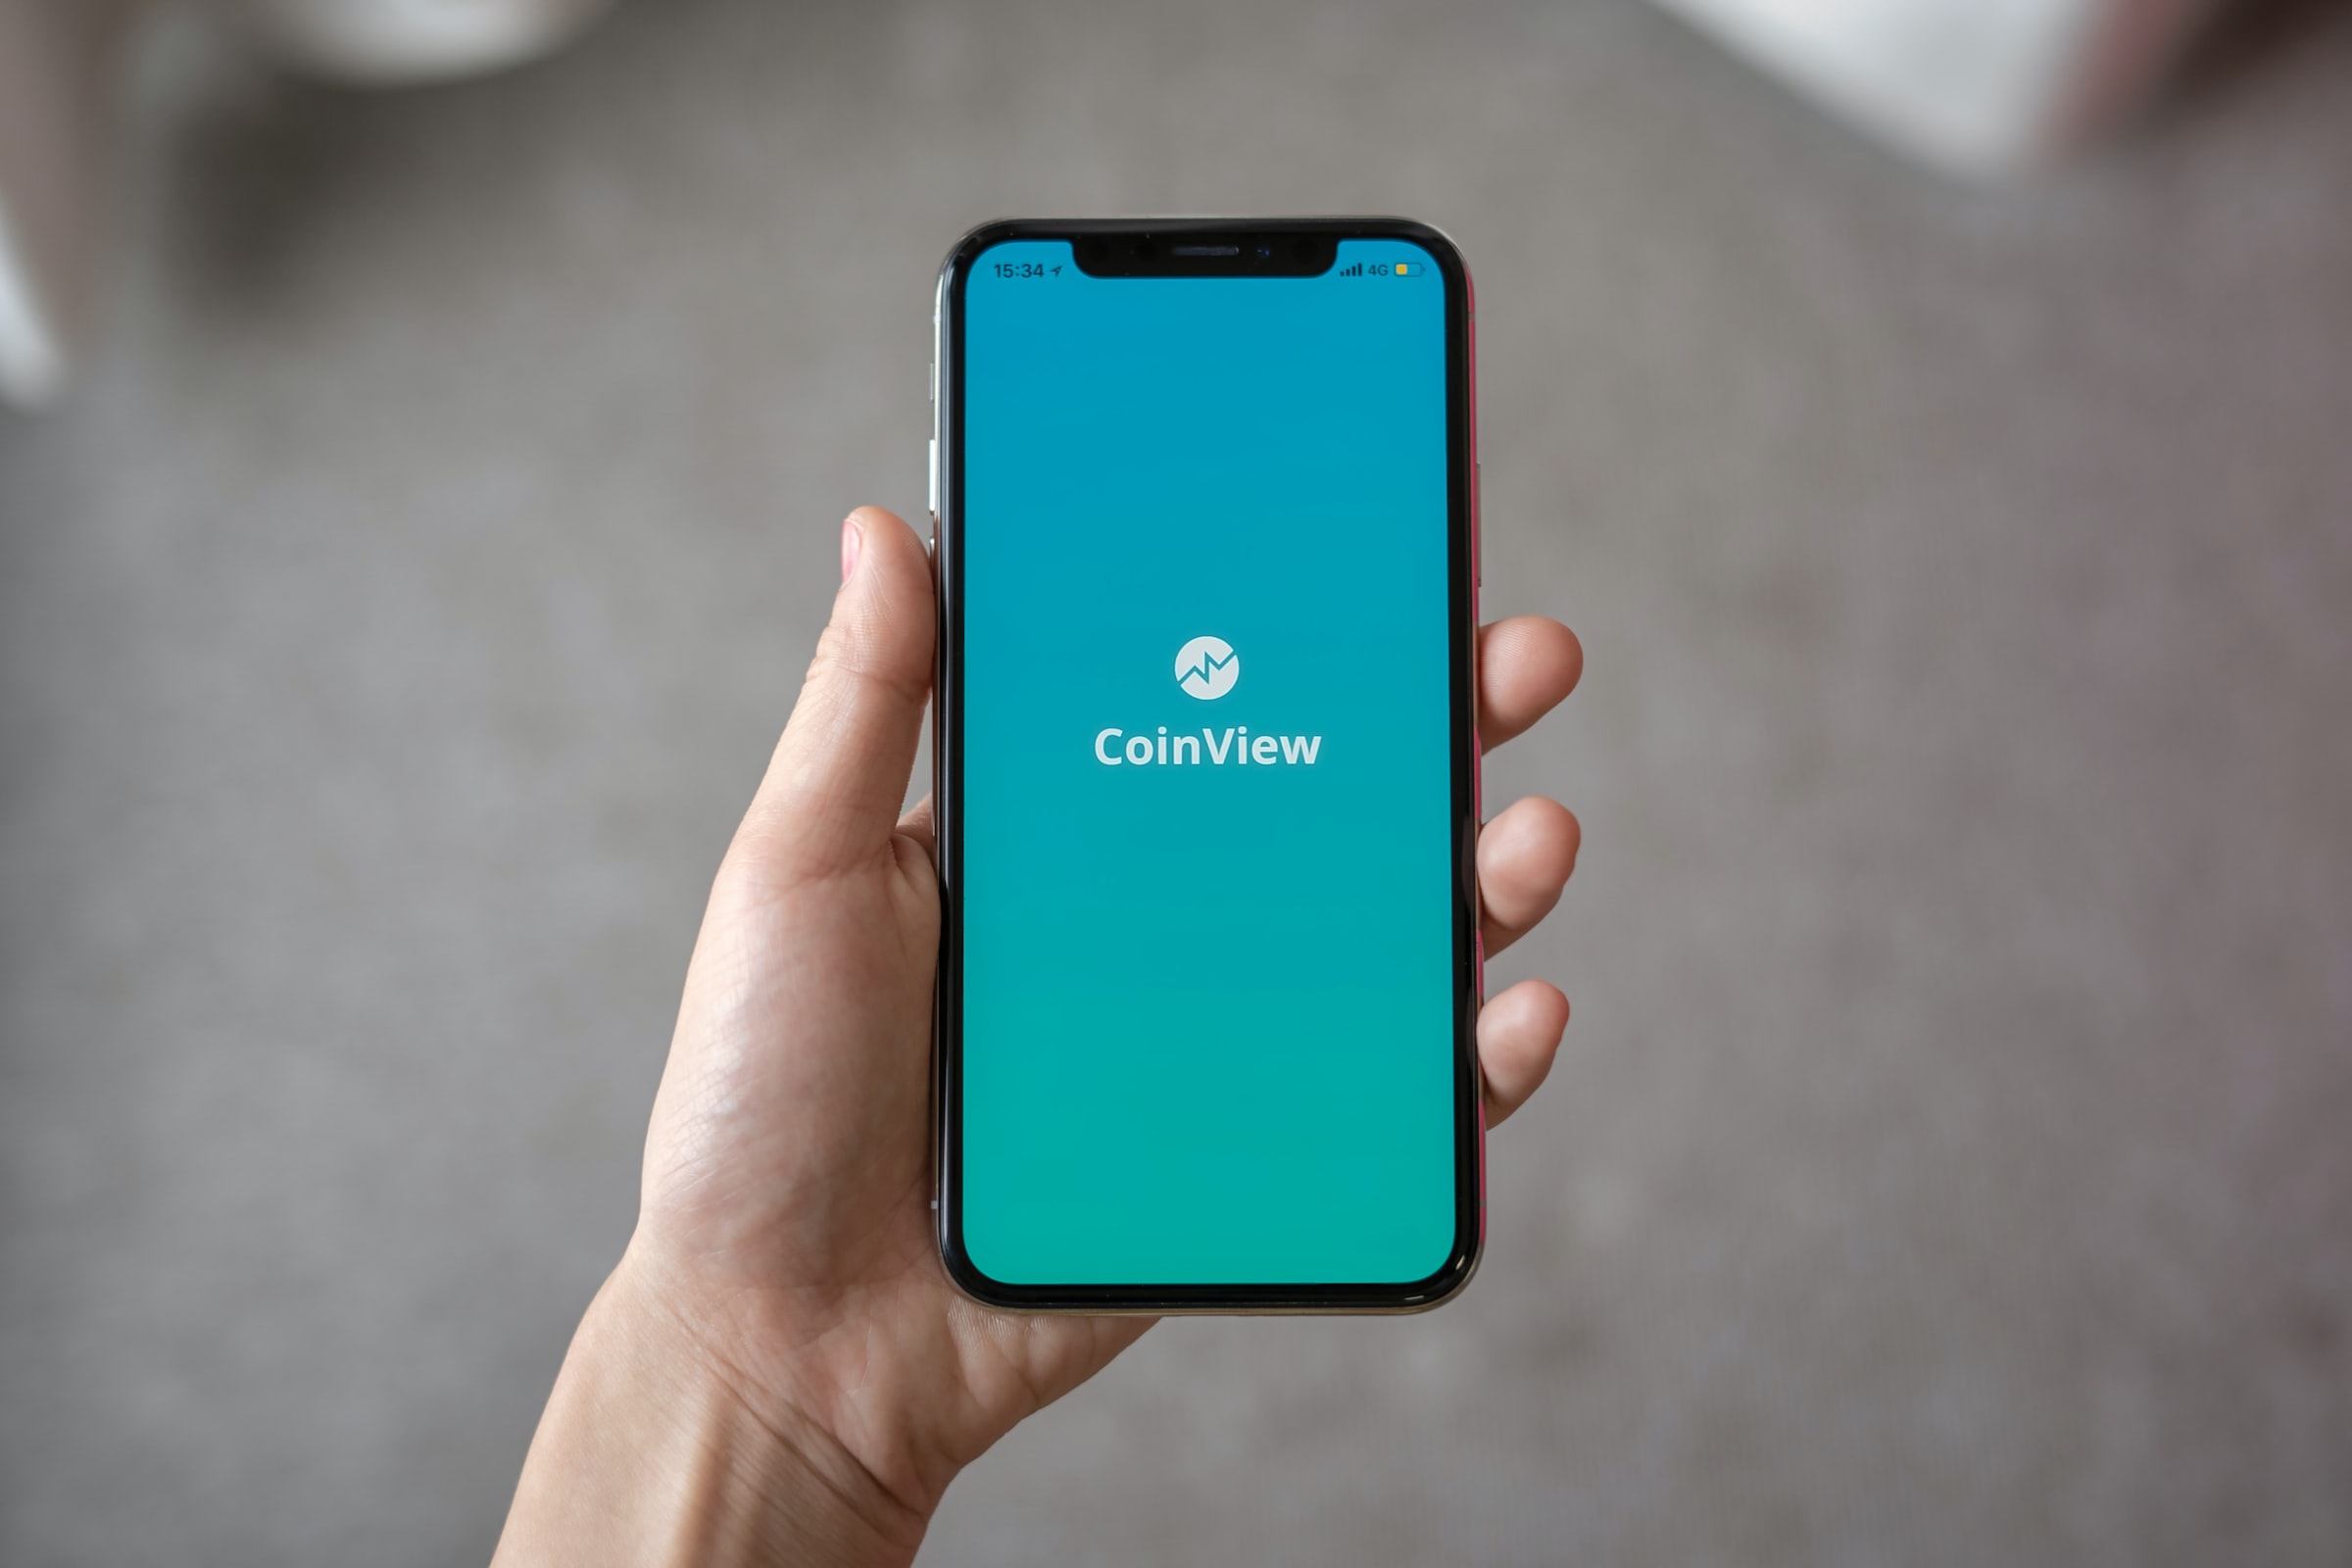 Coinview app icon